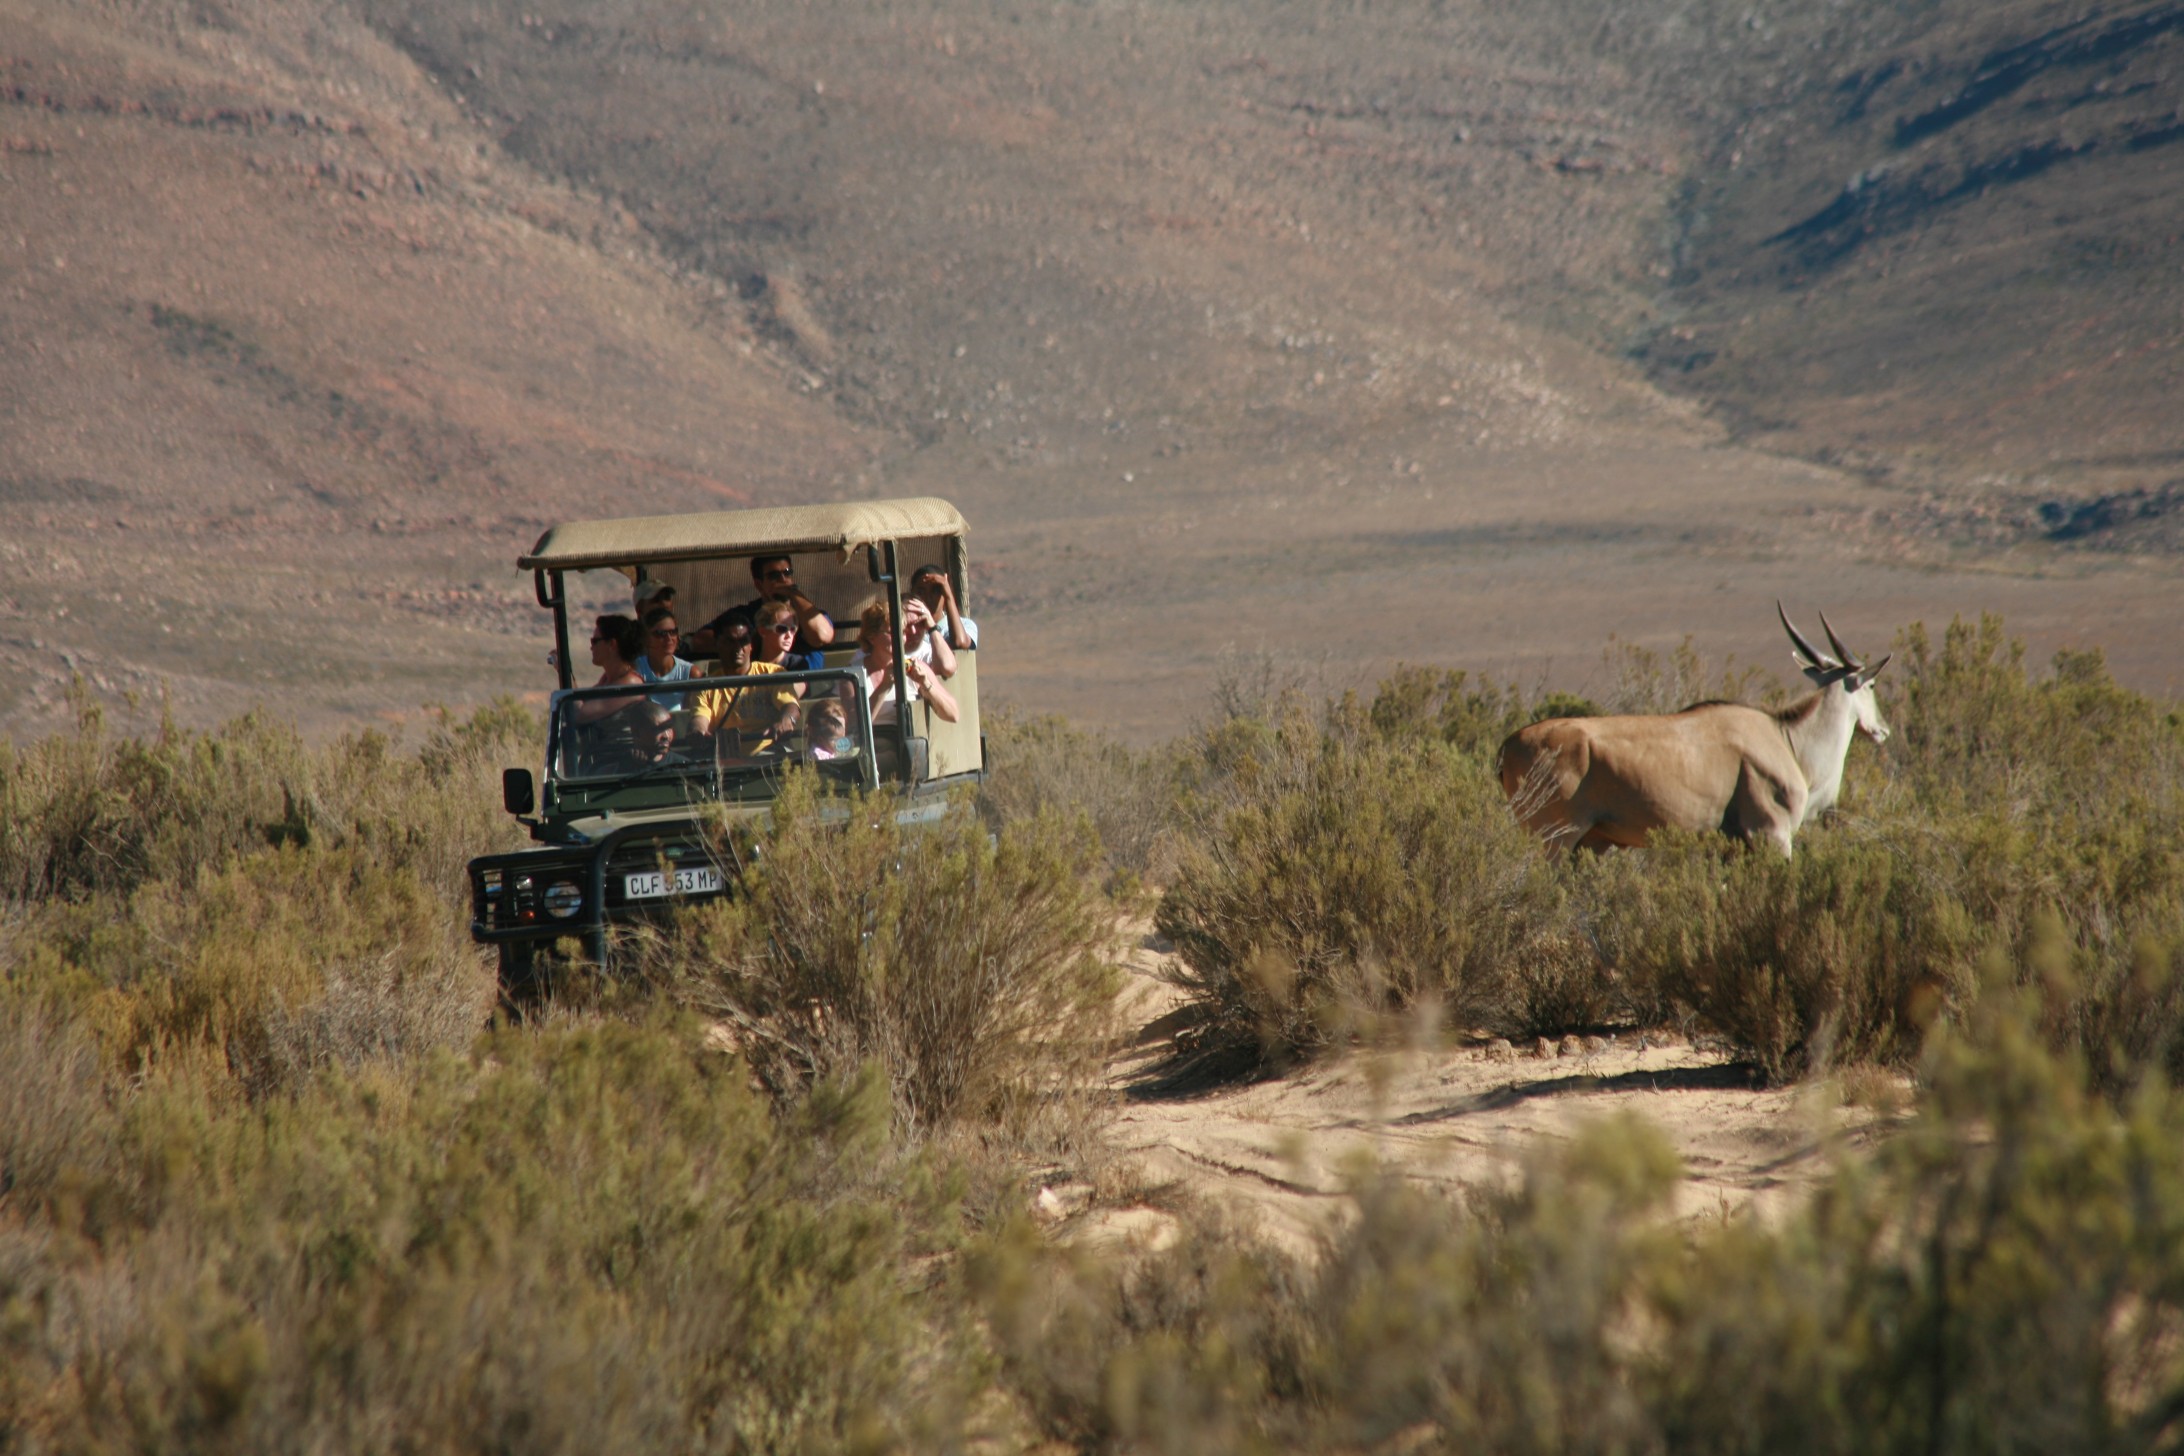 south africa safari tours cape town